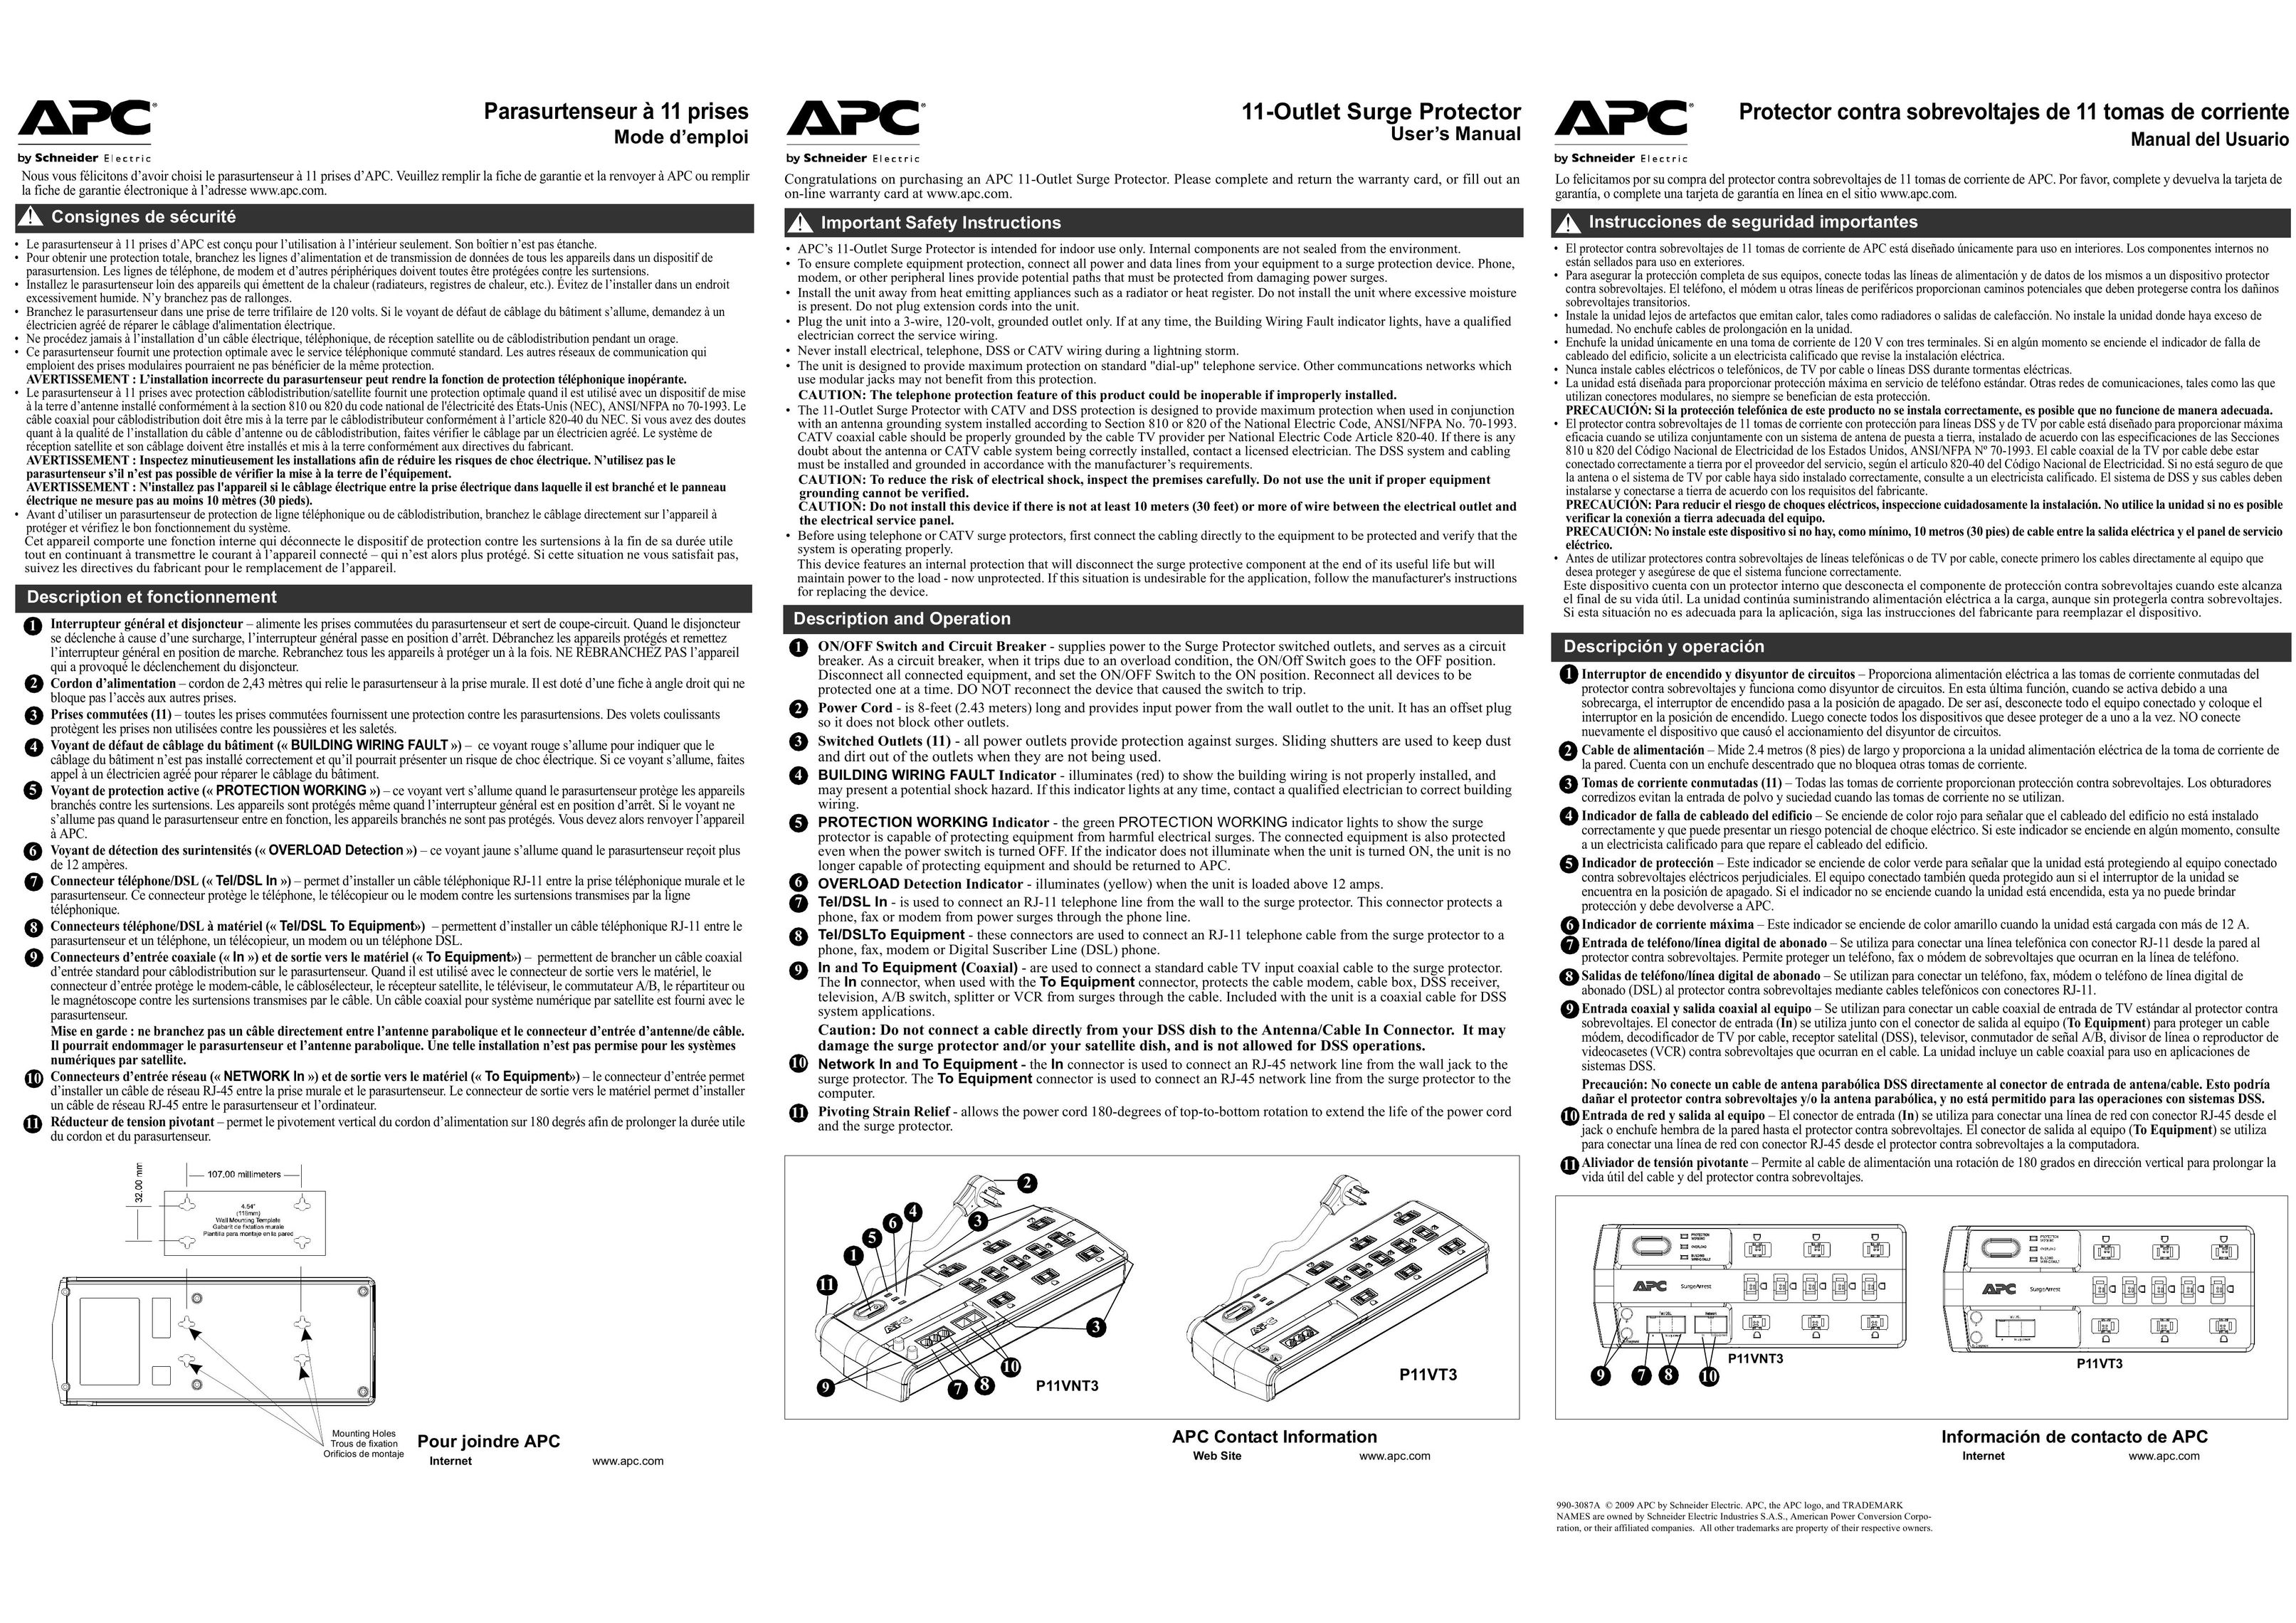 APC P11VT3 Surge Protector User Manual